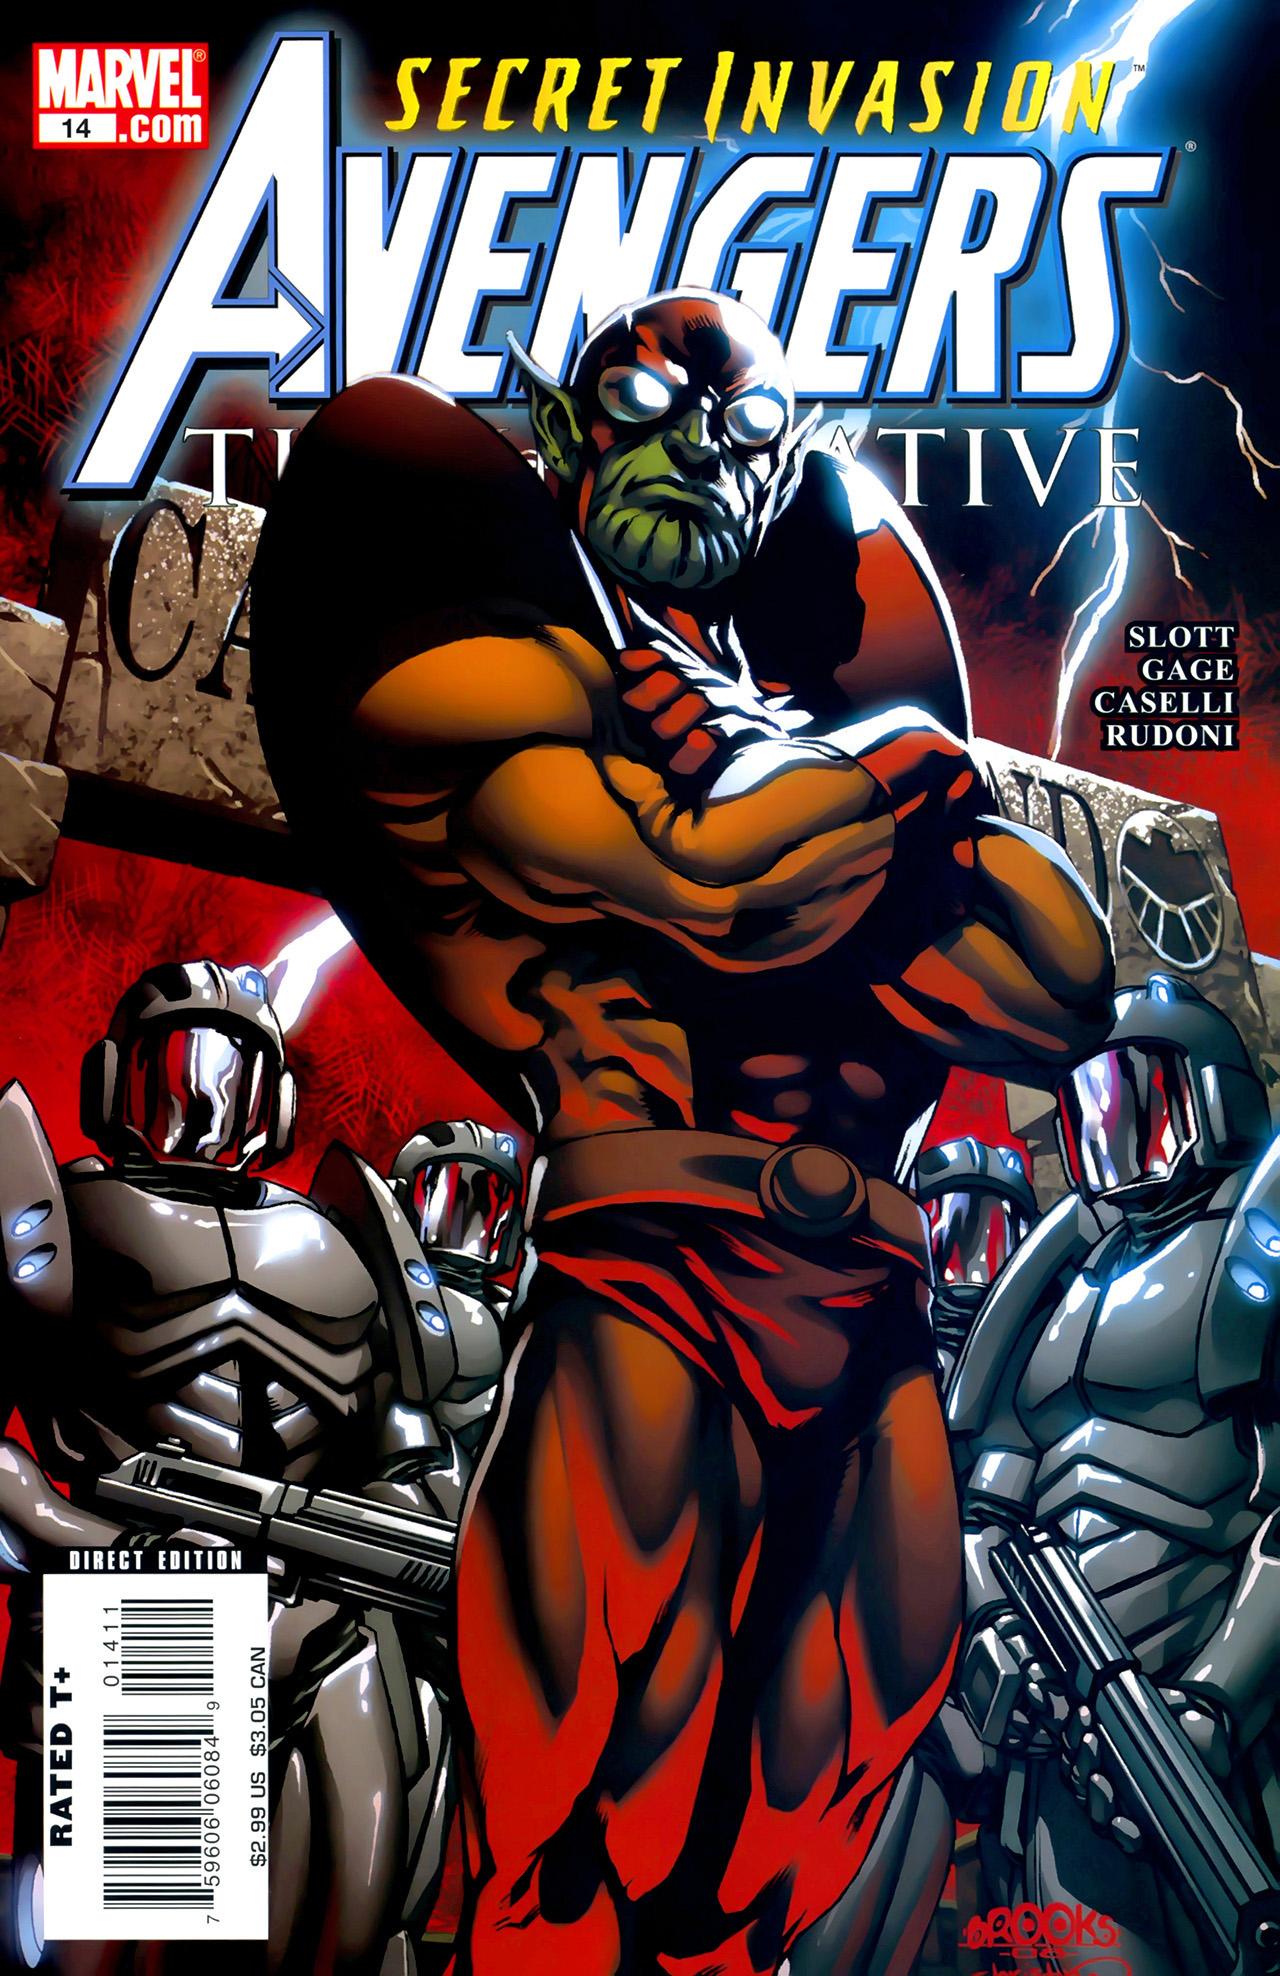 Avengers: The Initiative #1